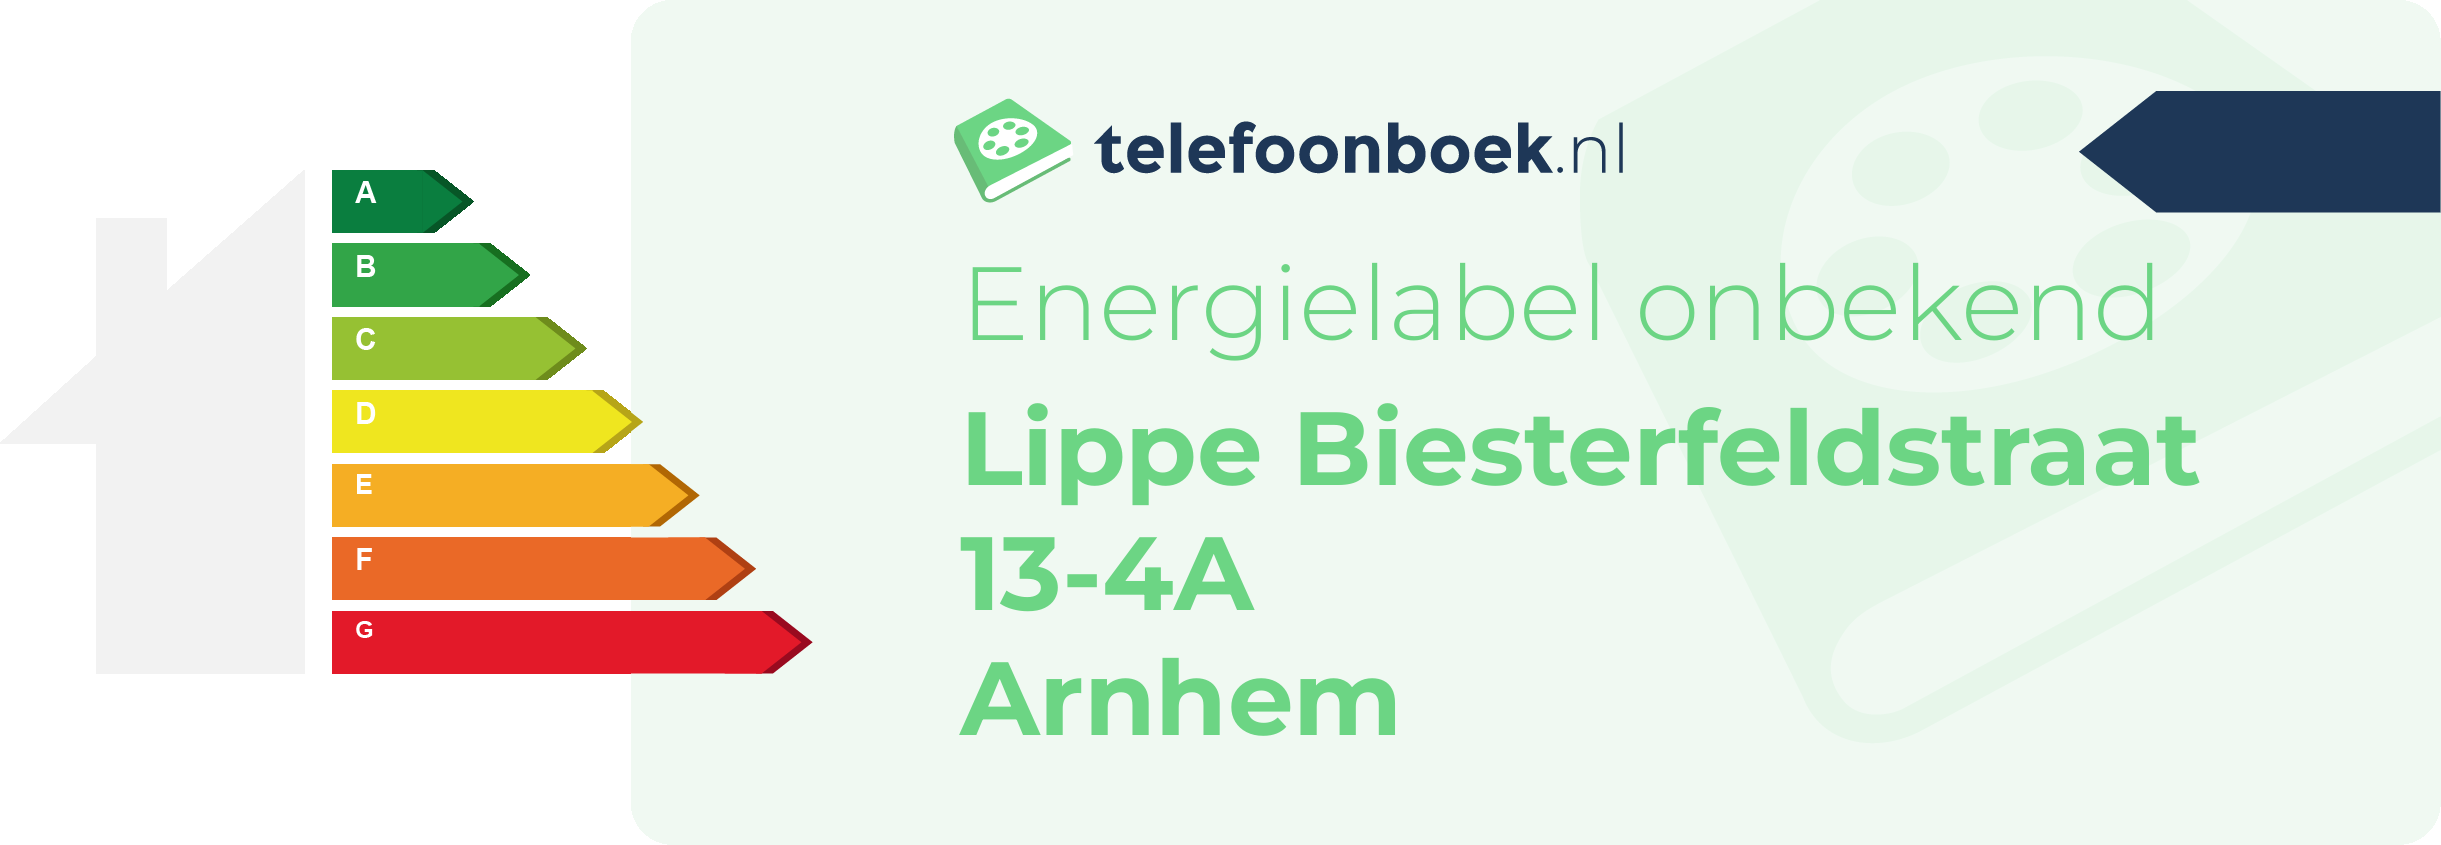 Energielabel Lippe Biesterfeldstraat 13-4A Arnhem